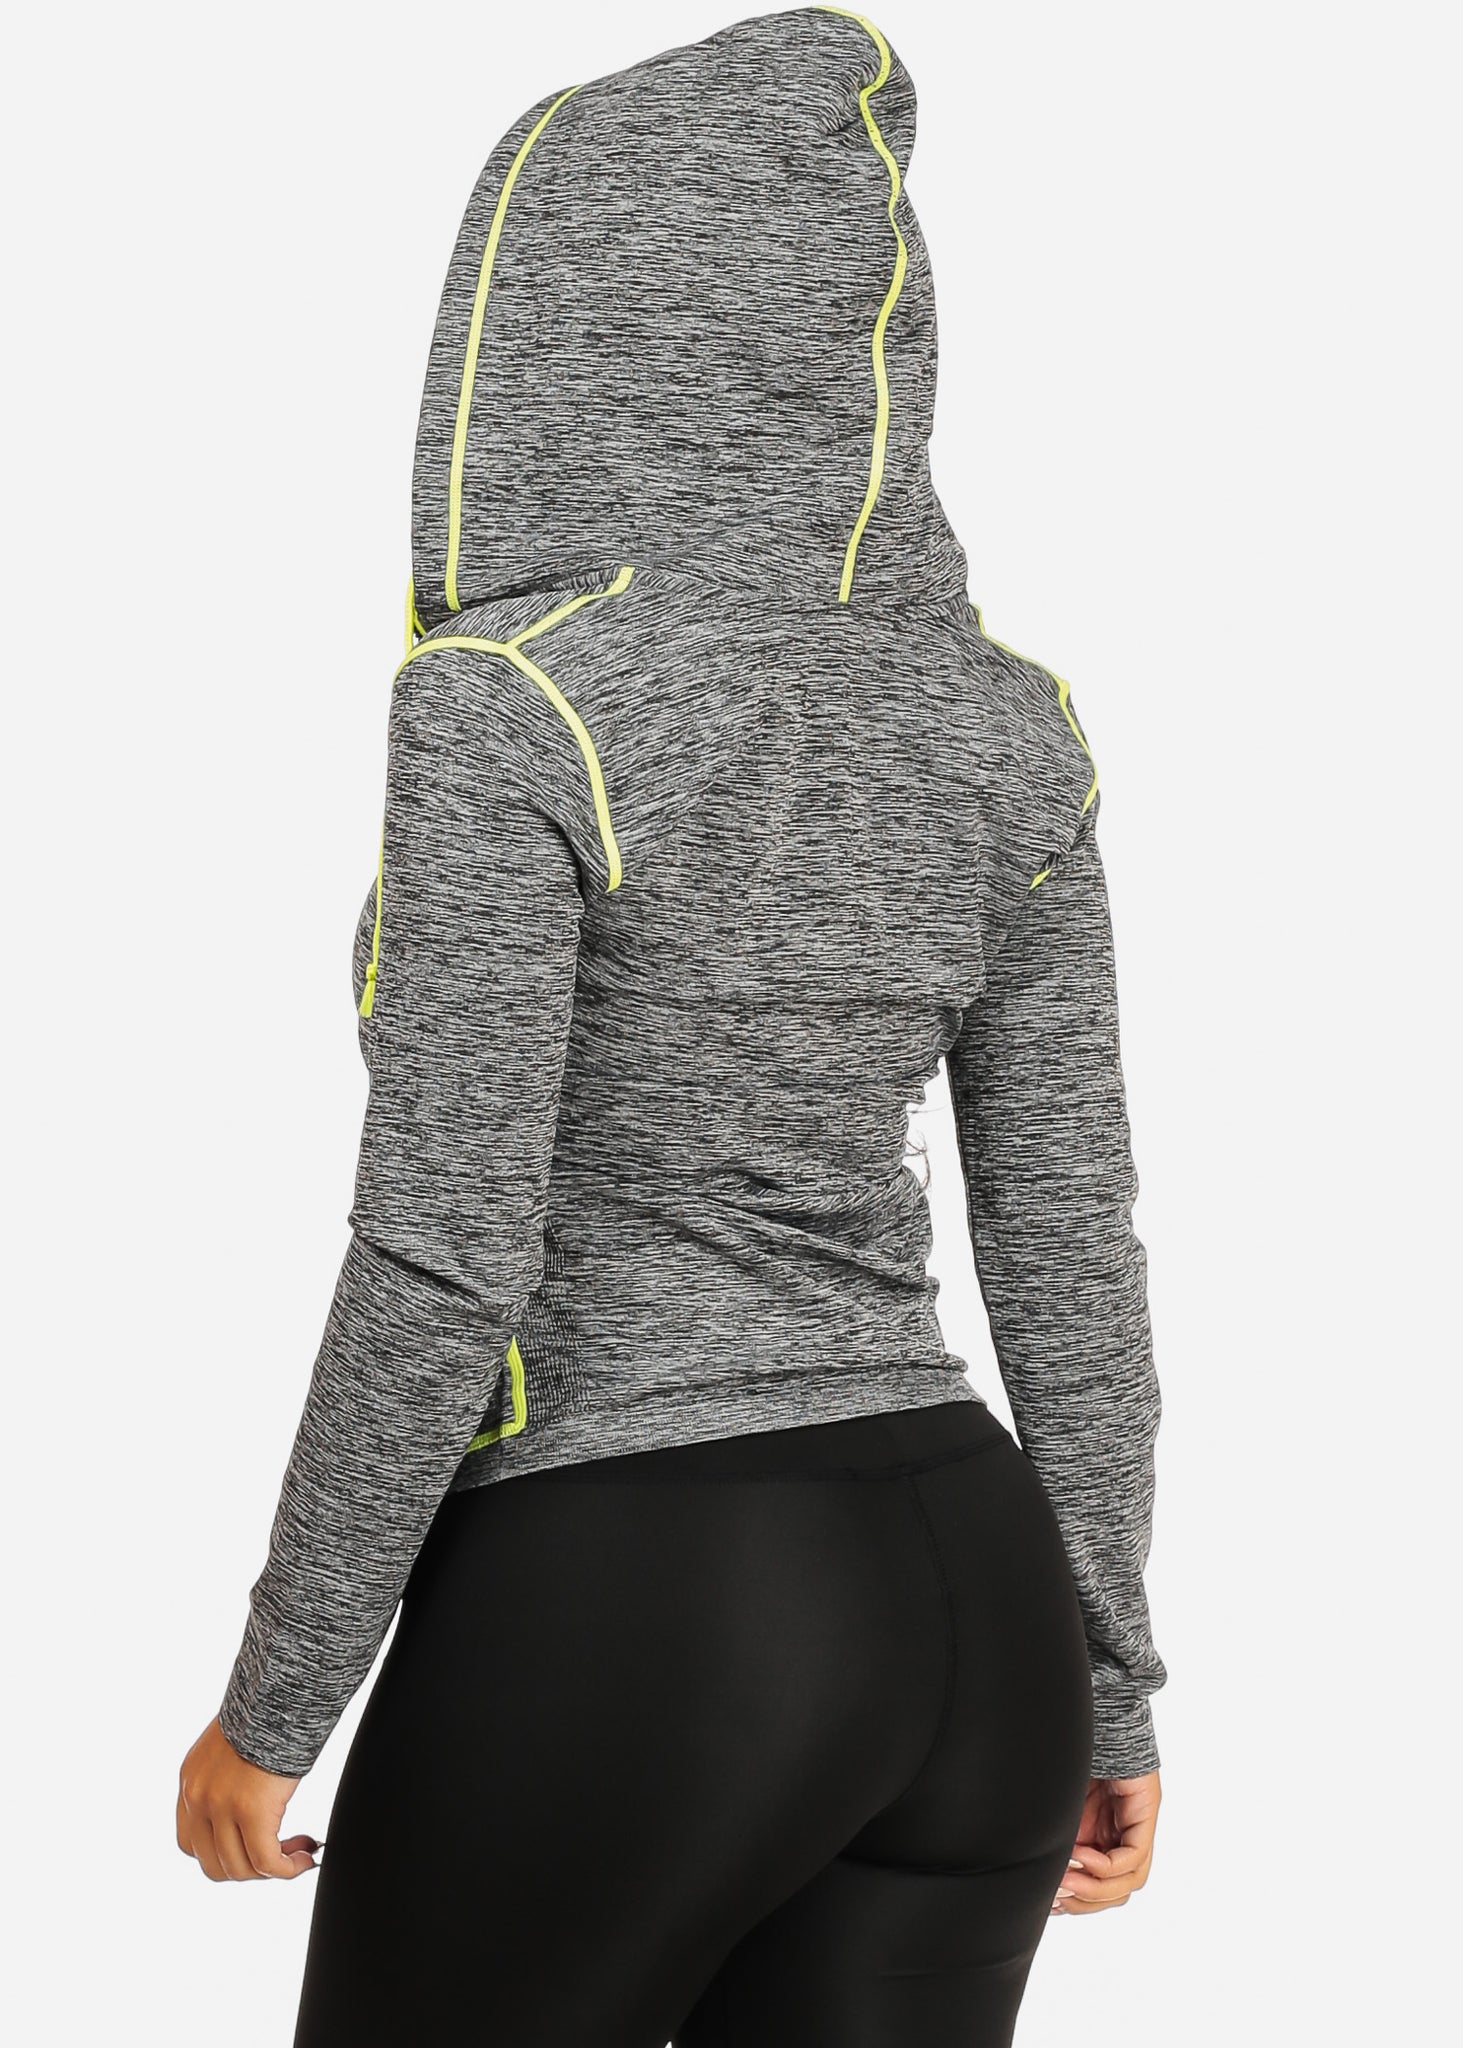 Women's Activewear Jacket, Full Zip Up Hoodie, Long Sleeve Workout Wear